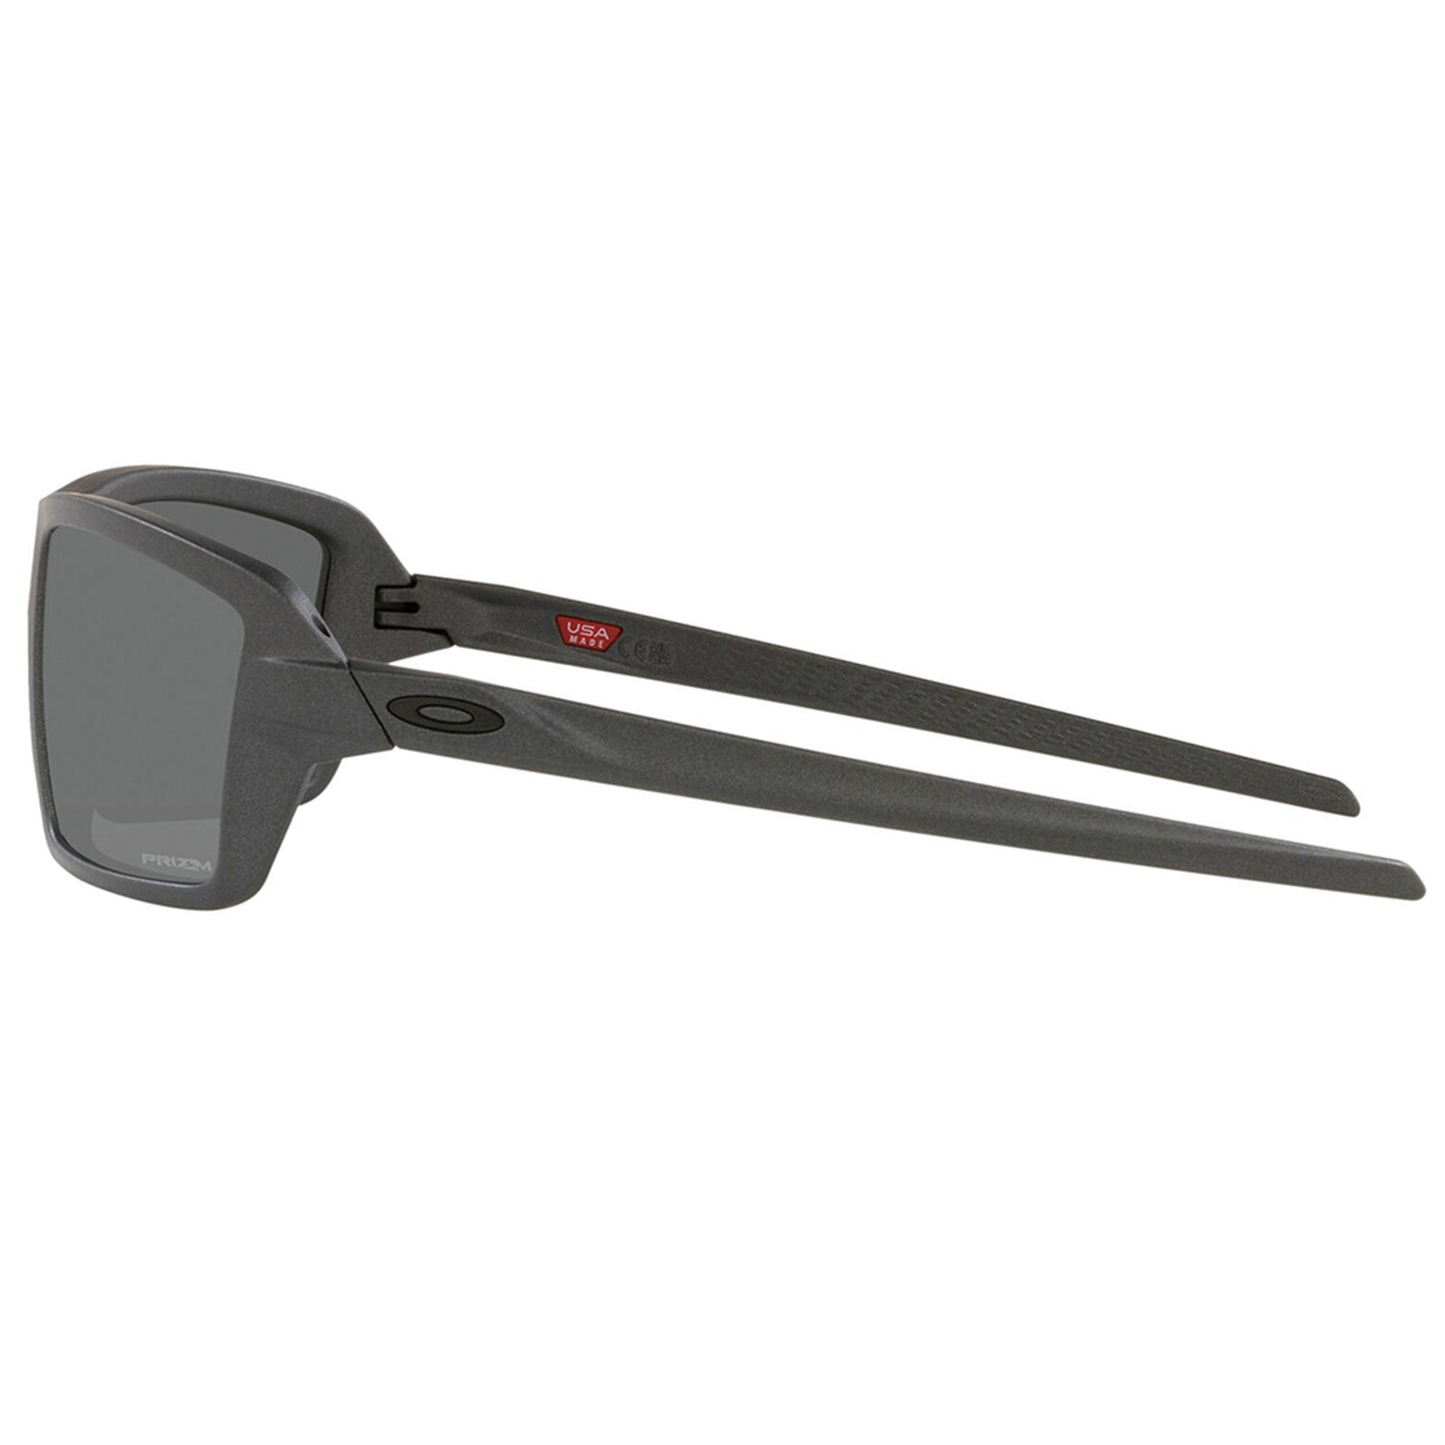 Oakley Cables Sunglasses (Steel) Prizm Black Lens - Free Case